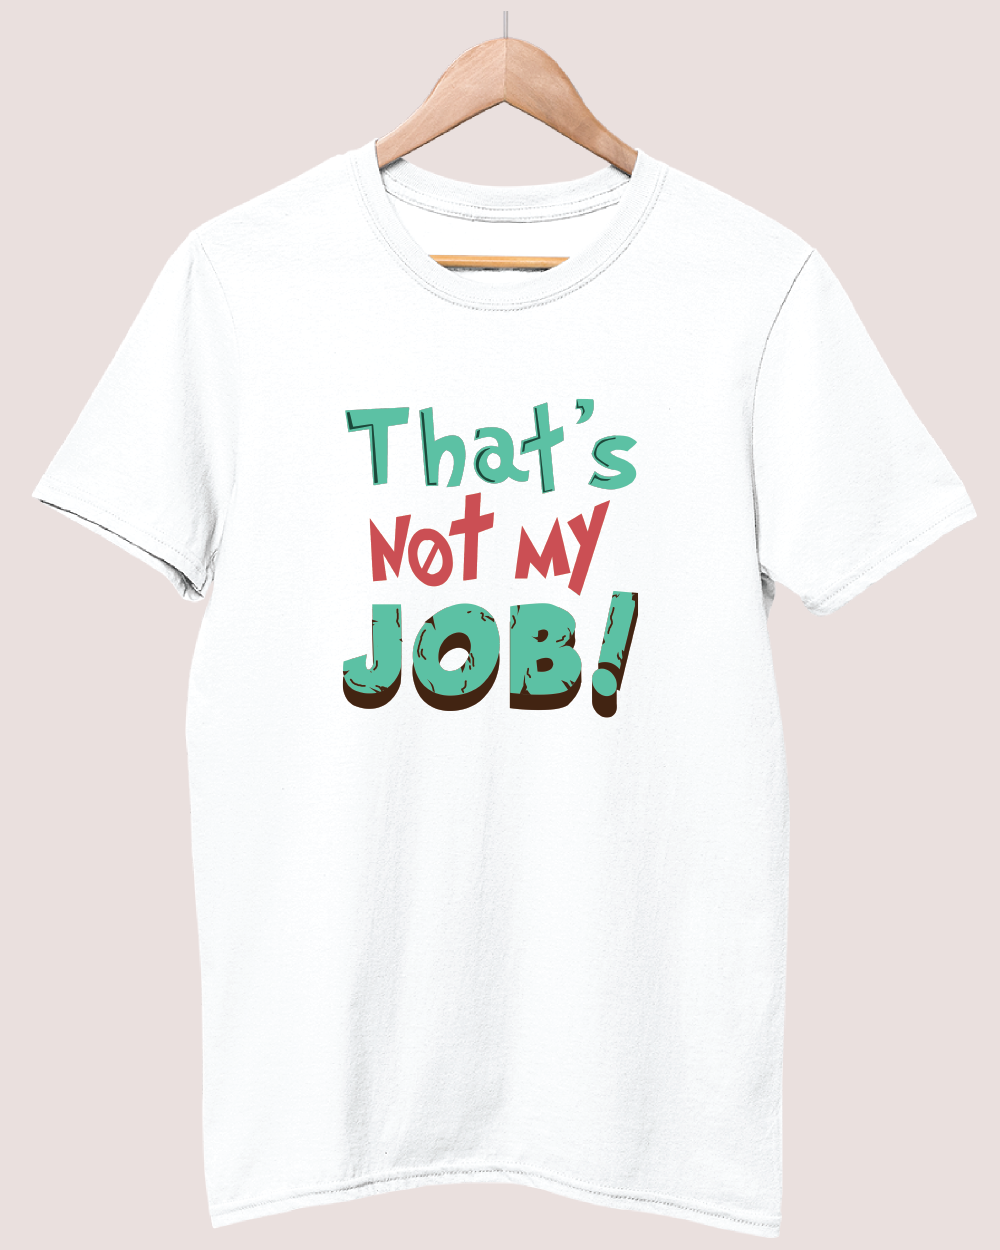 Thats not my job T-shirt